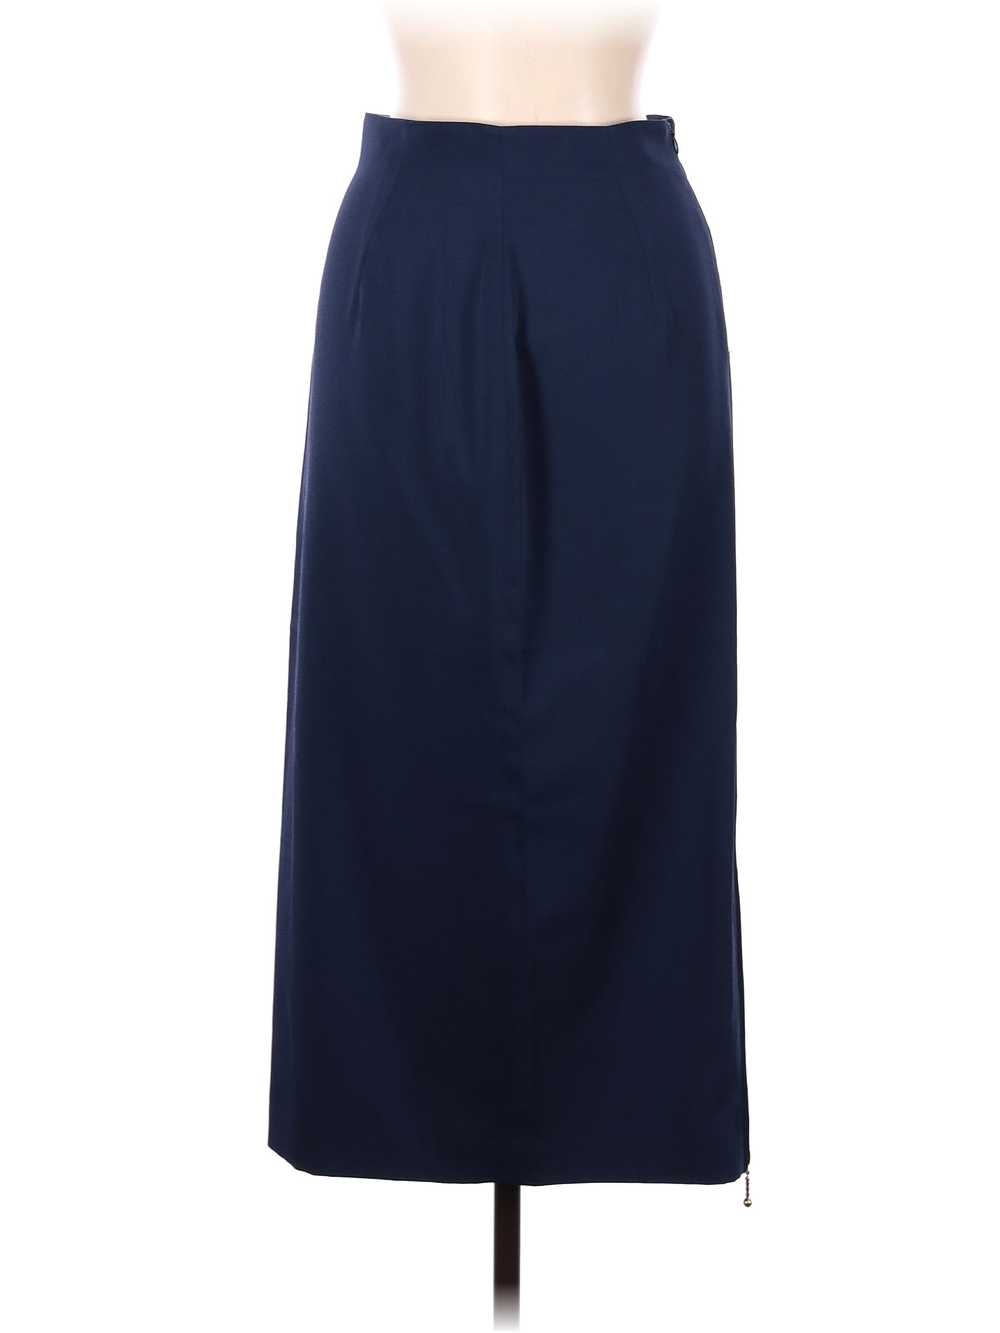 Laura Leigh ltd. Women Blue Casual Skirt 6 - image 2